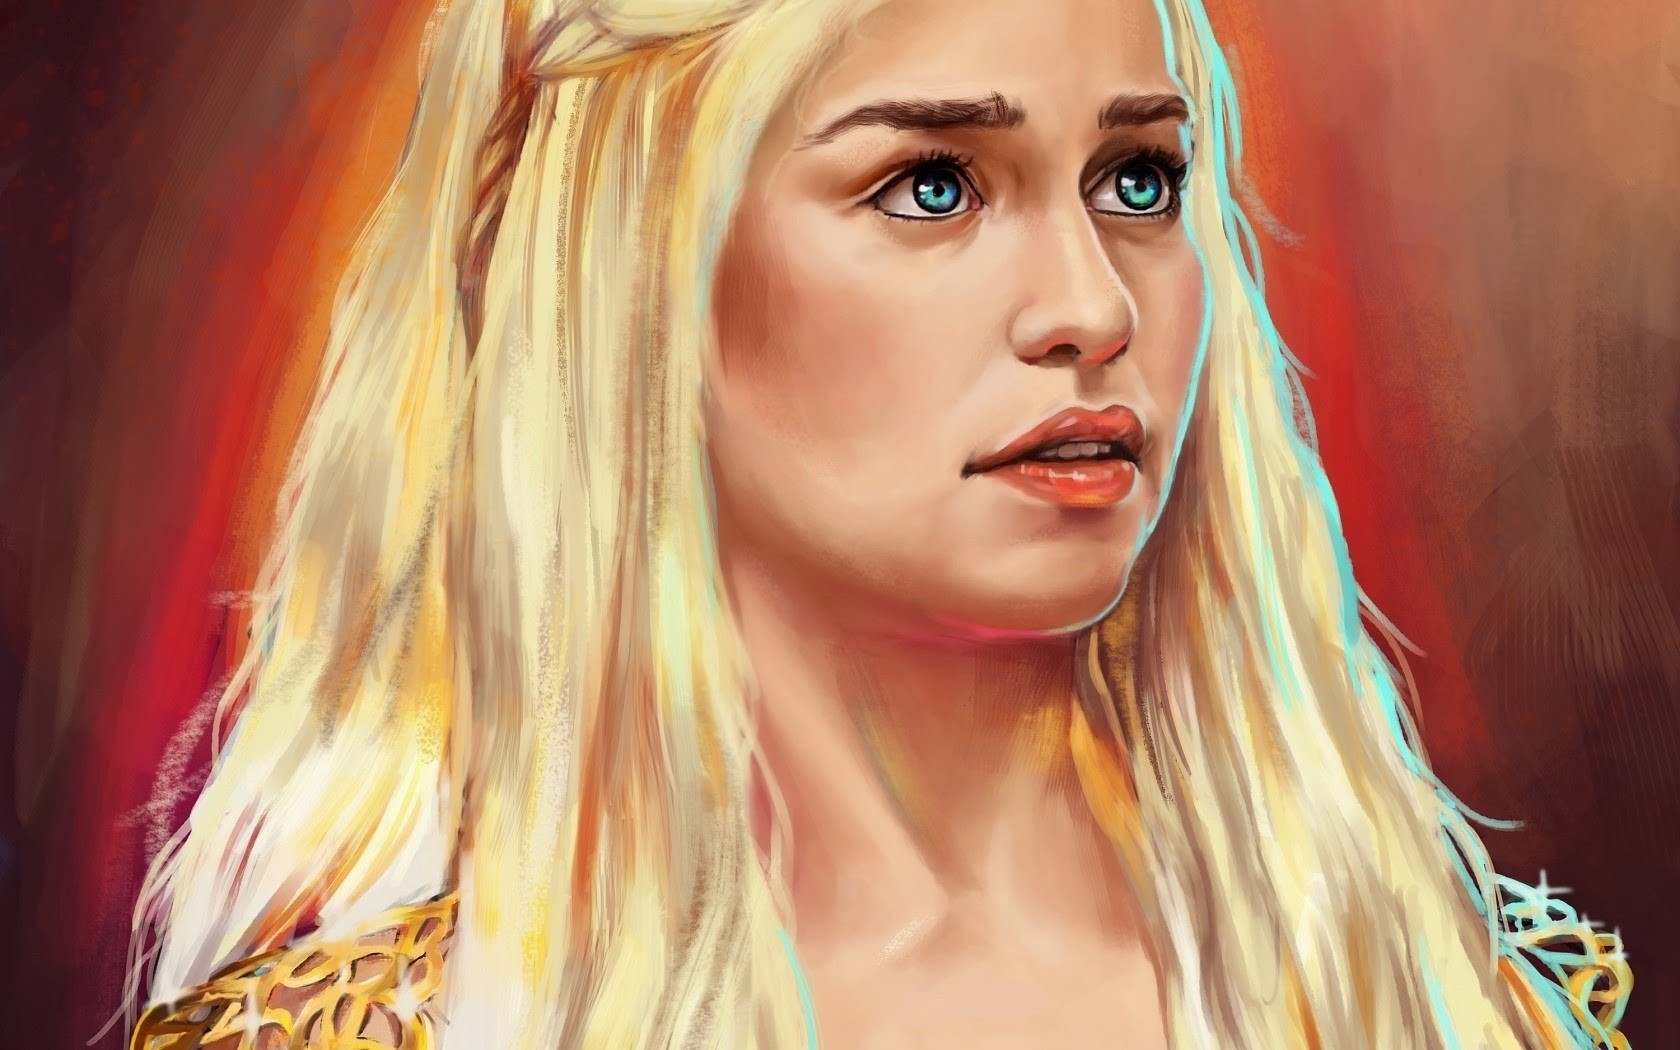 General 1680x1050 digital art Daenerys Targaryen Game of Thrones fan art TV series fantasy art fantasy girl blonde red lipstick blue eyes women